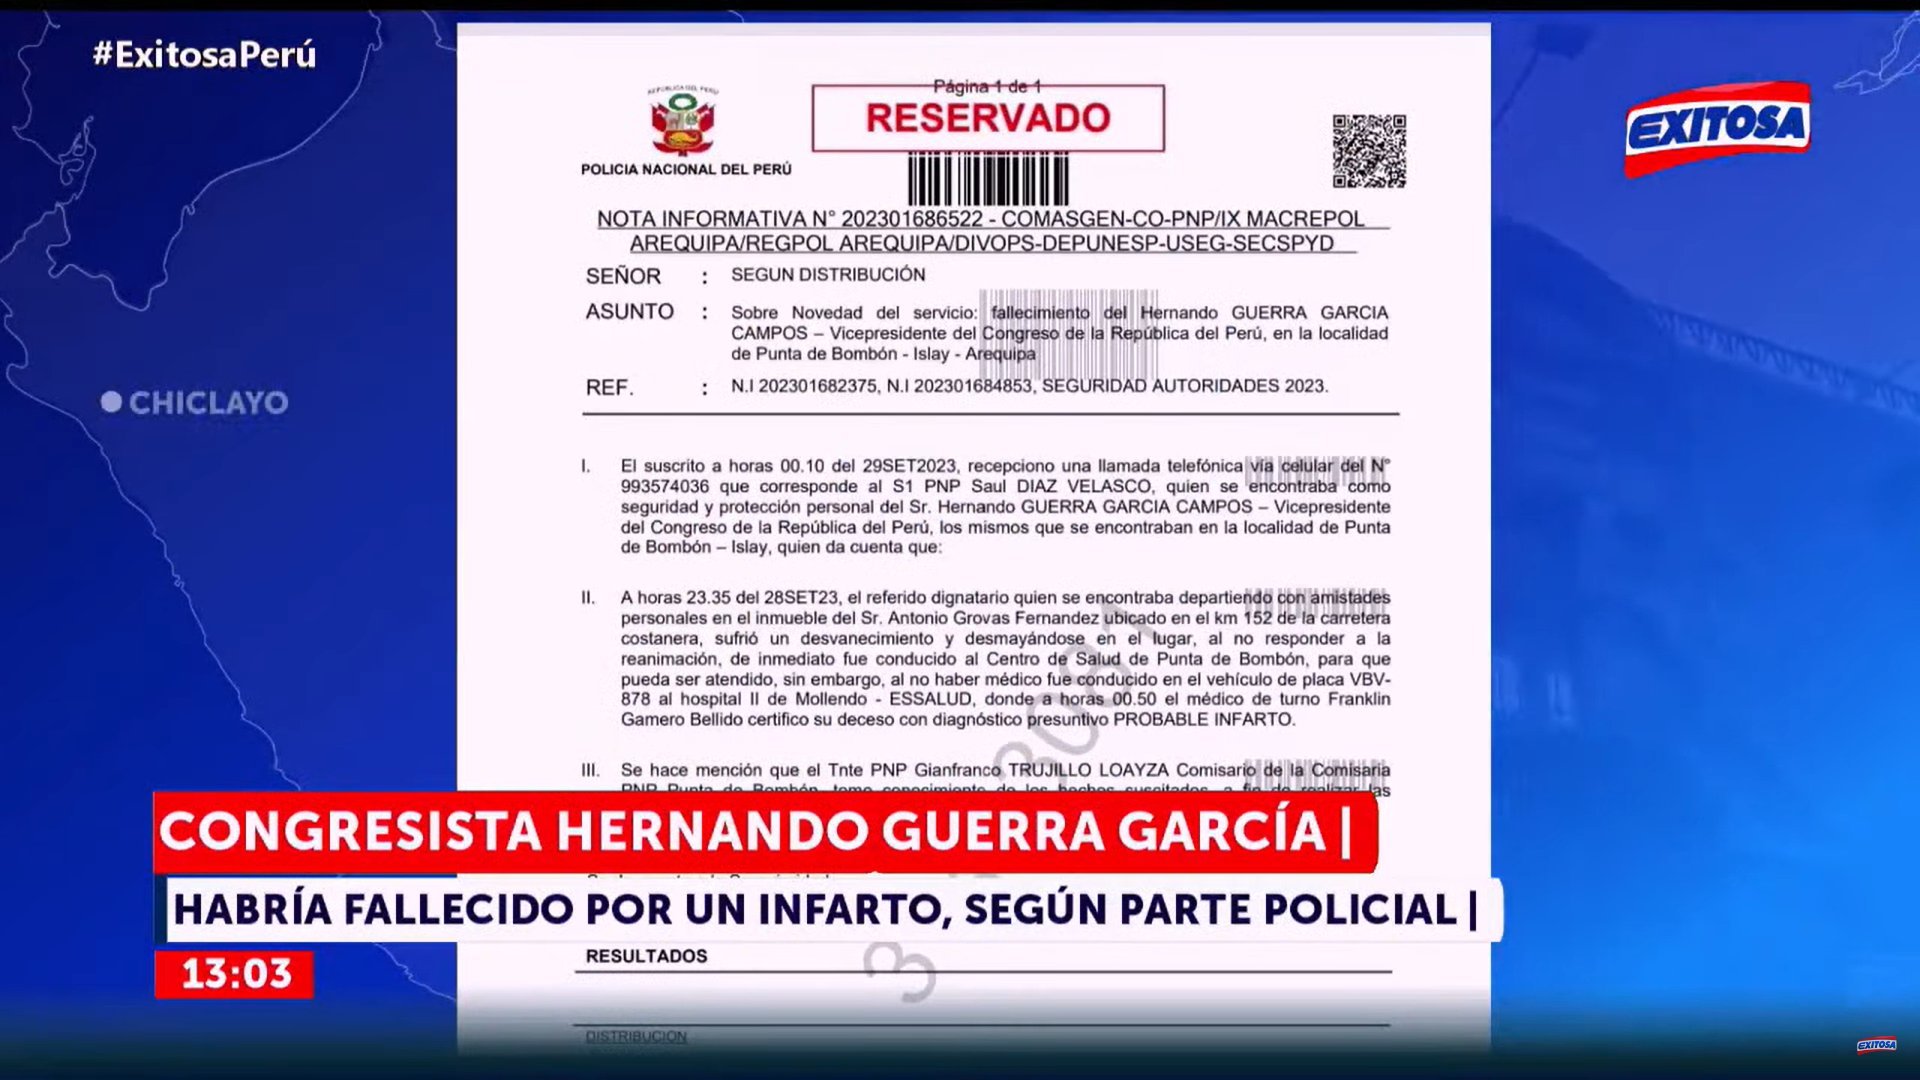 Congresista Hernando Guerra Garca habra fallecido por un infarto.